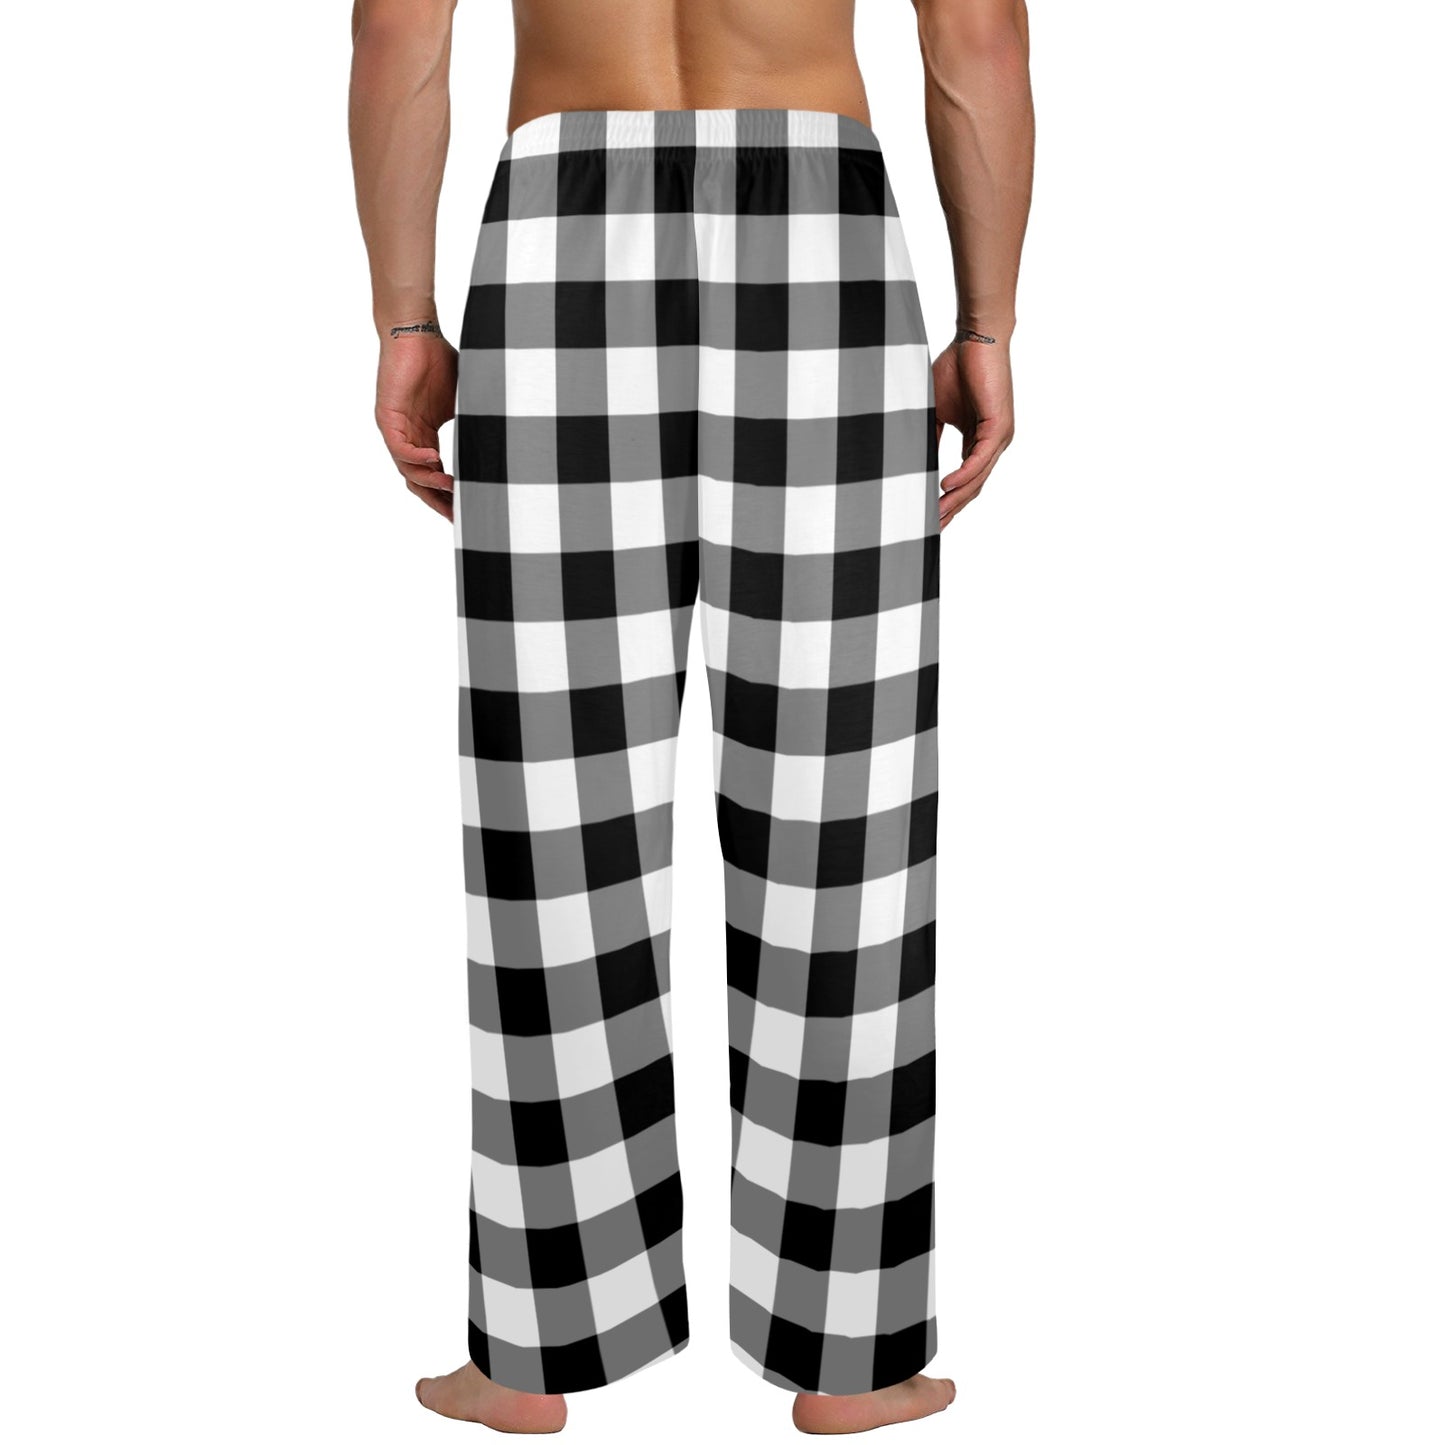 followme Mens Pajama Pants Pajamas for Men (Black White Buffalo